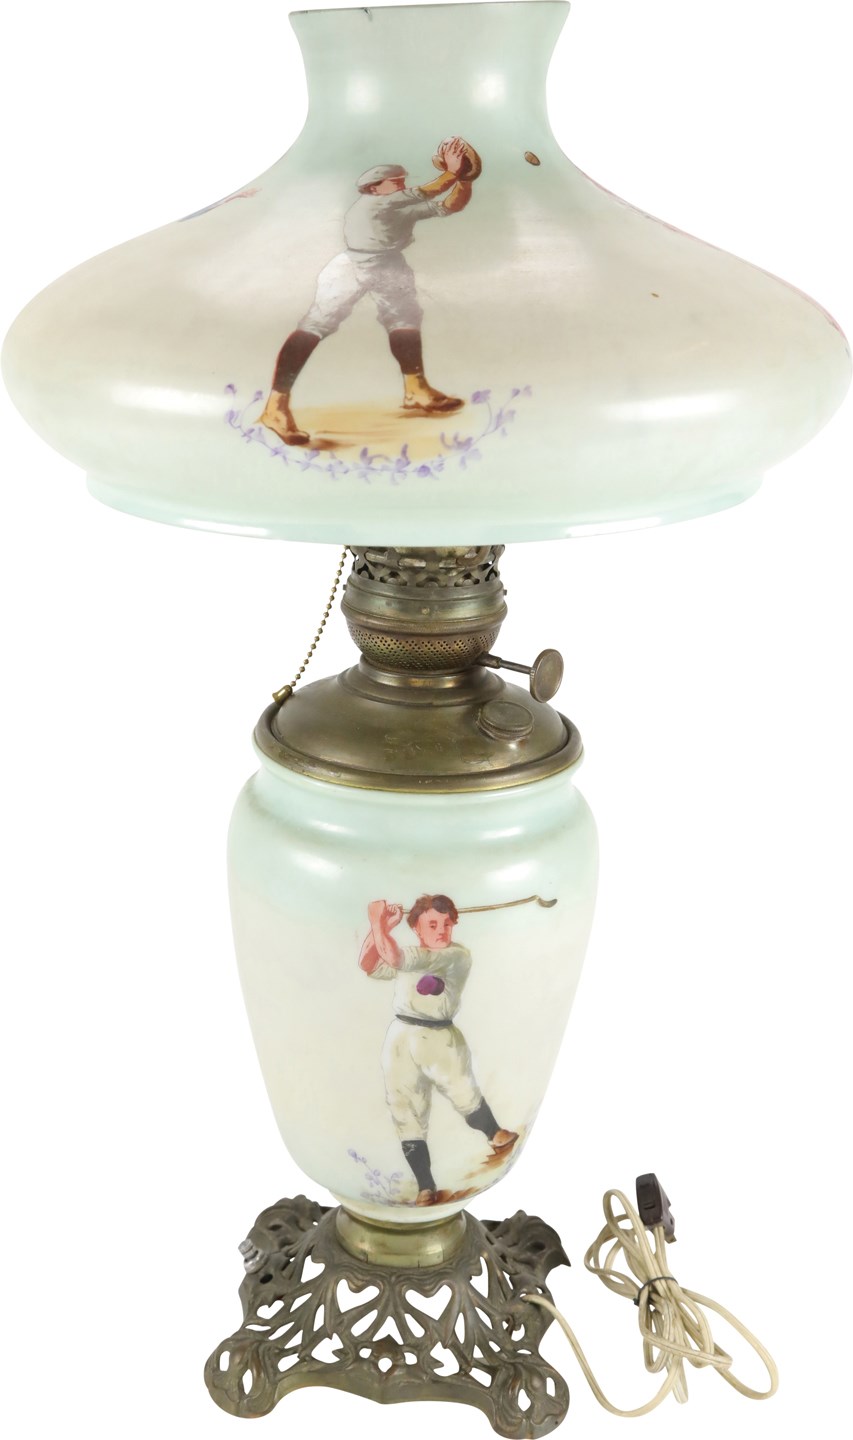 Baseball Memorabilia - Circa 1900 Decorative Hand-Painted Glass Lamp with Sports Motif